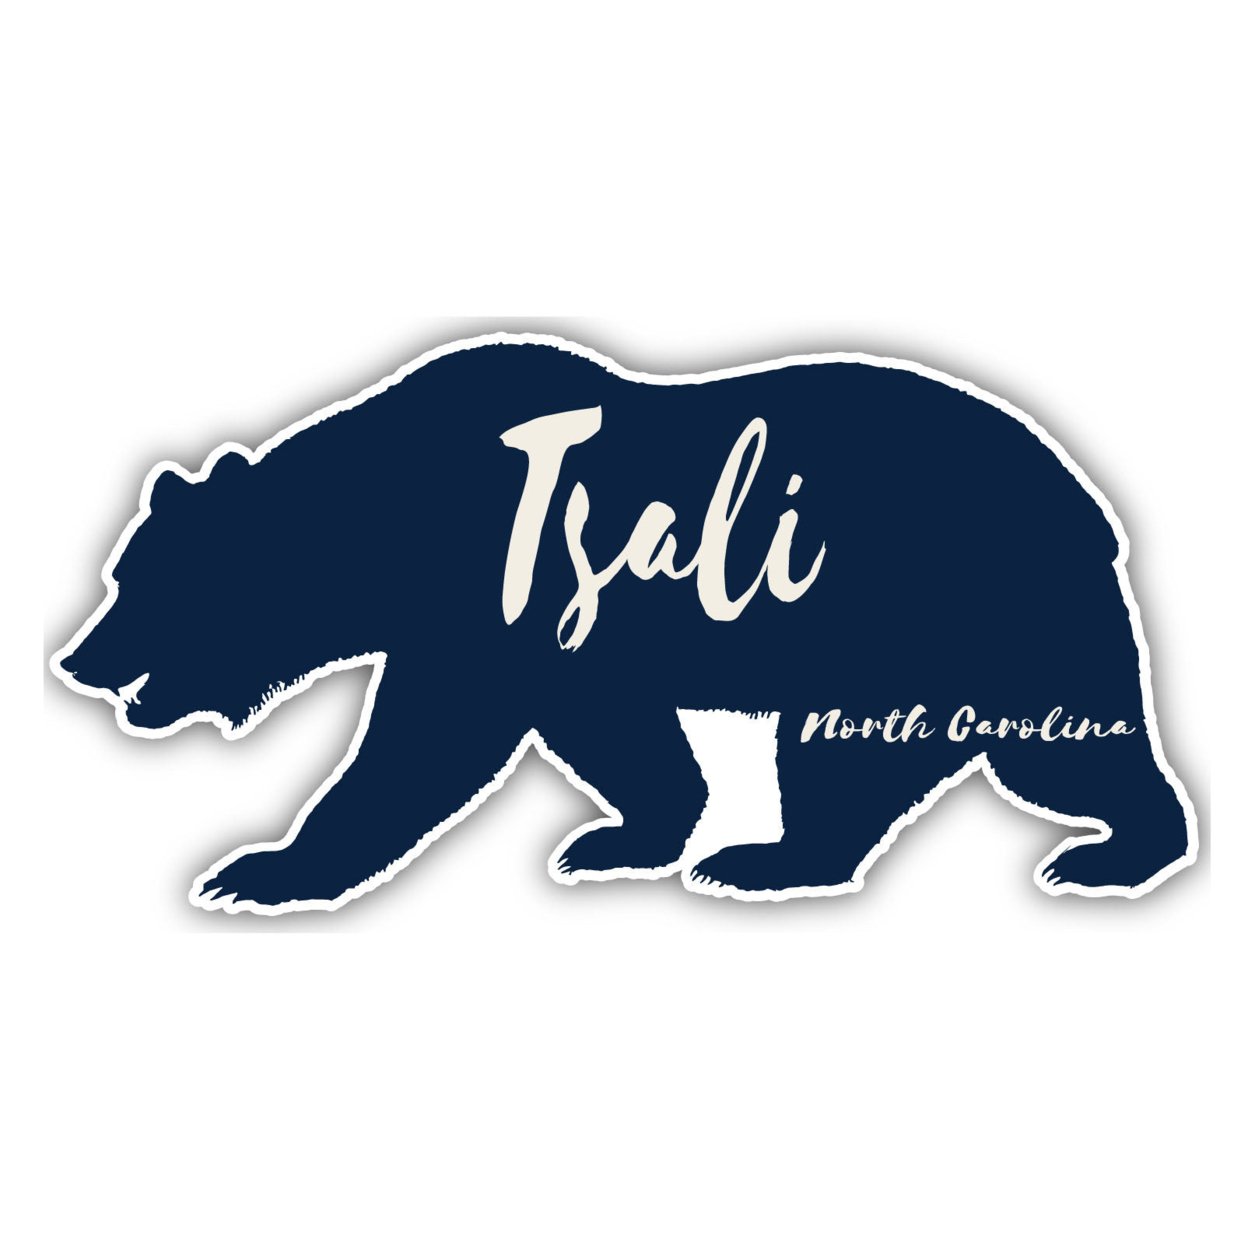 Tsali North Carolina Souvenir Decorative Stickers (Choose Theme And Size) - Single Unit, 2-Inch, Bear